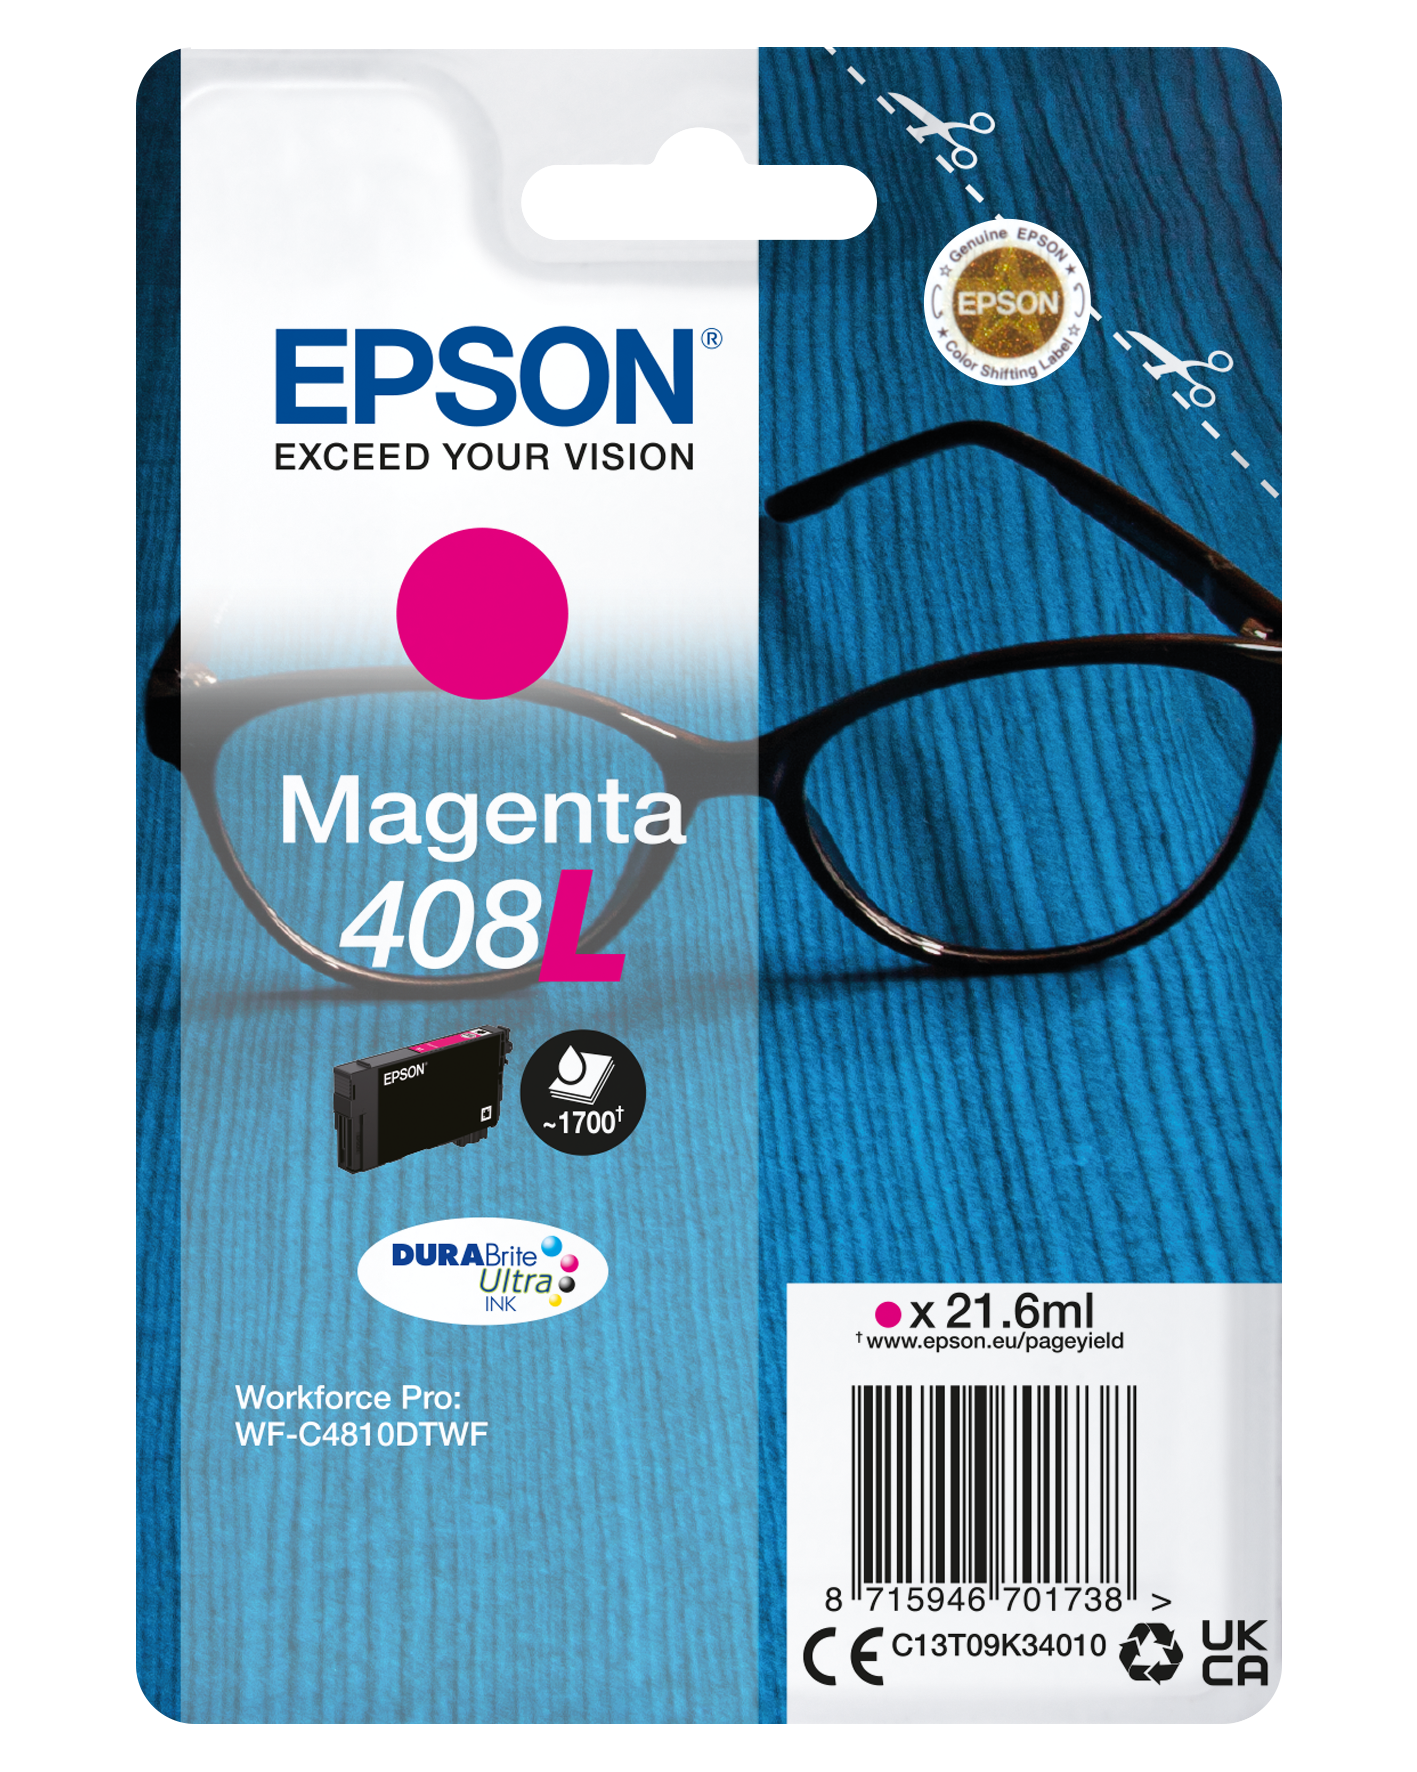 Epson Singlepack Magenta 408L DURABrite Ultra Ink single pack / magenta